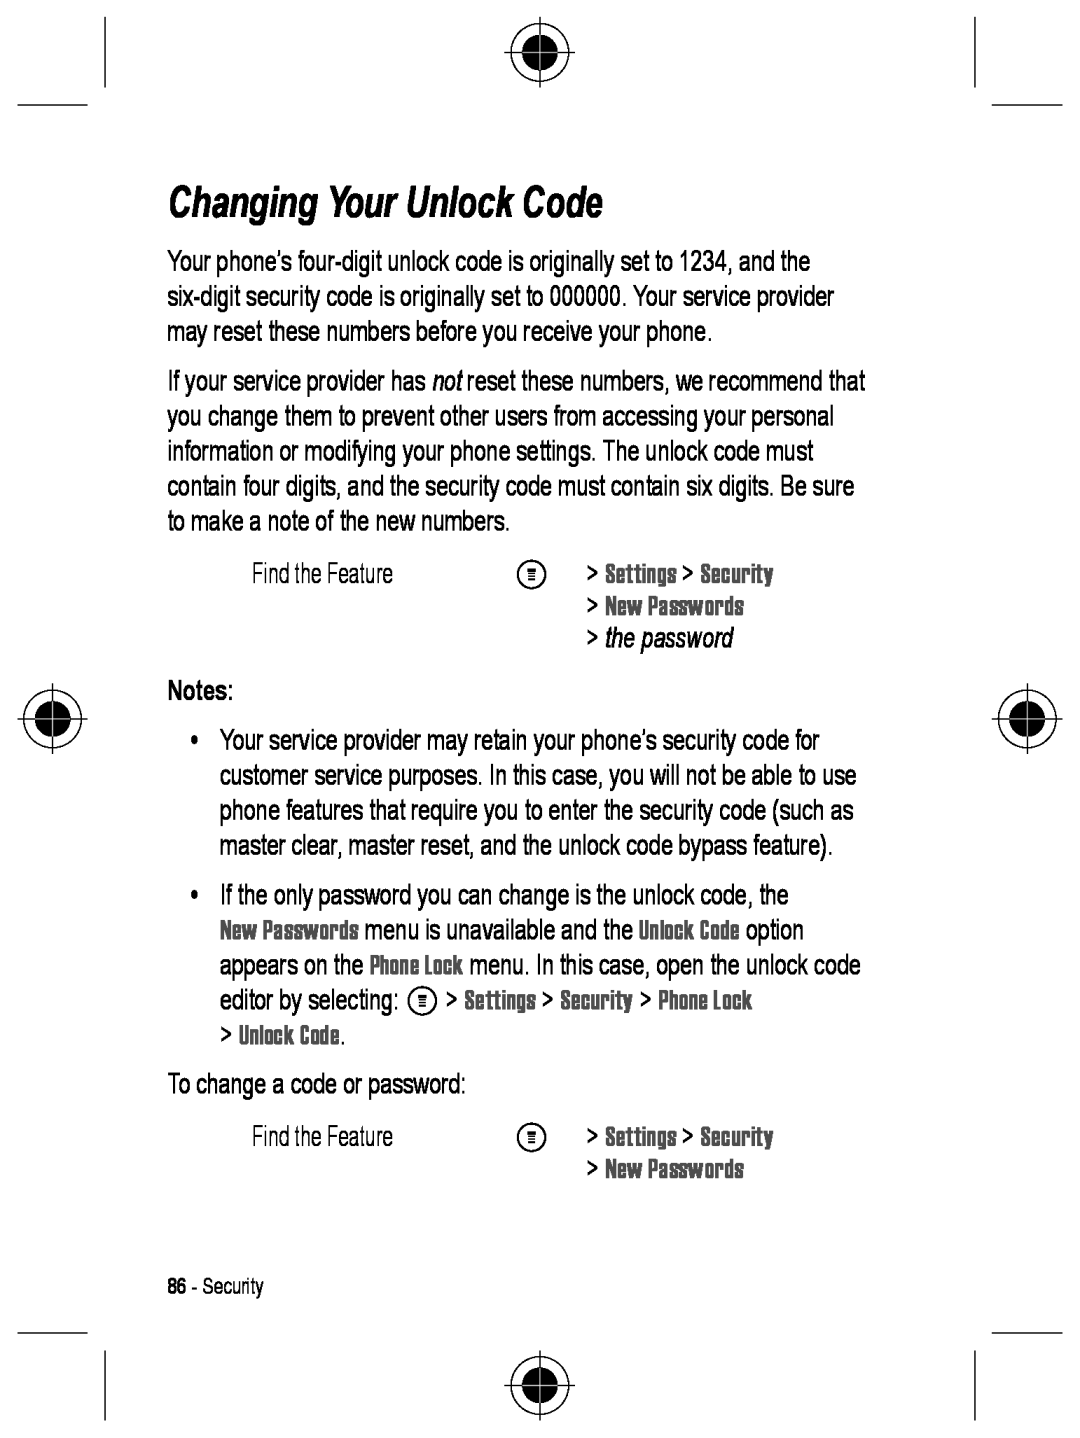 Motorola C330 manual Changing Your Unlock Code, M Settings Security, New Passwords, the password 